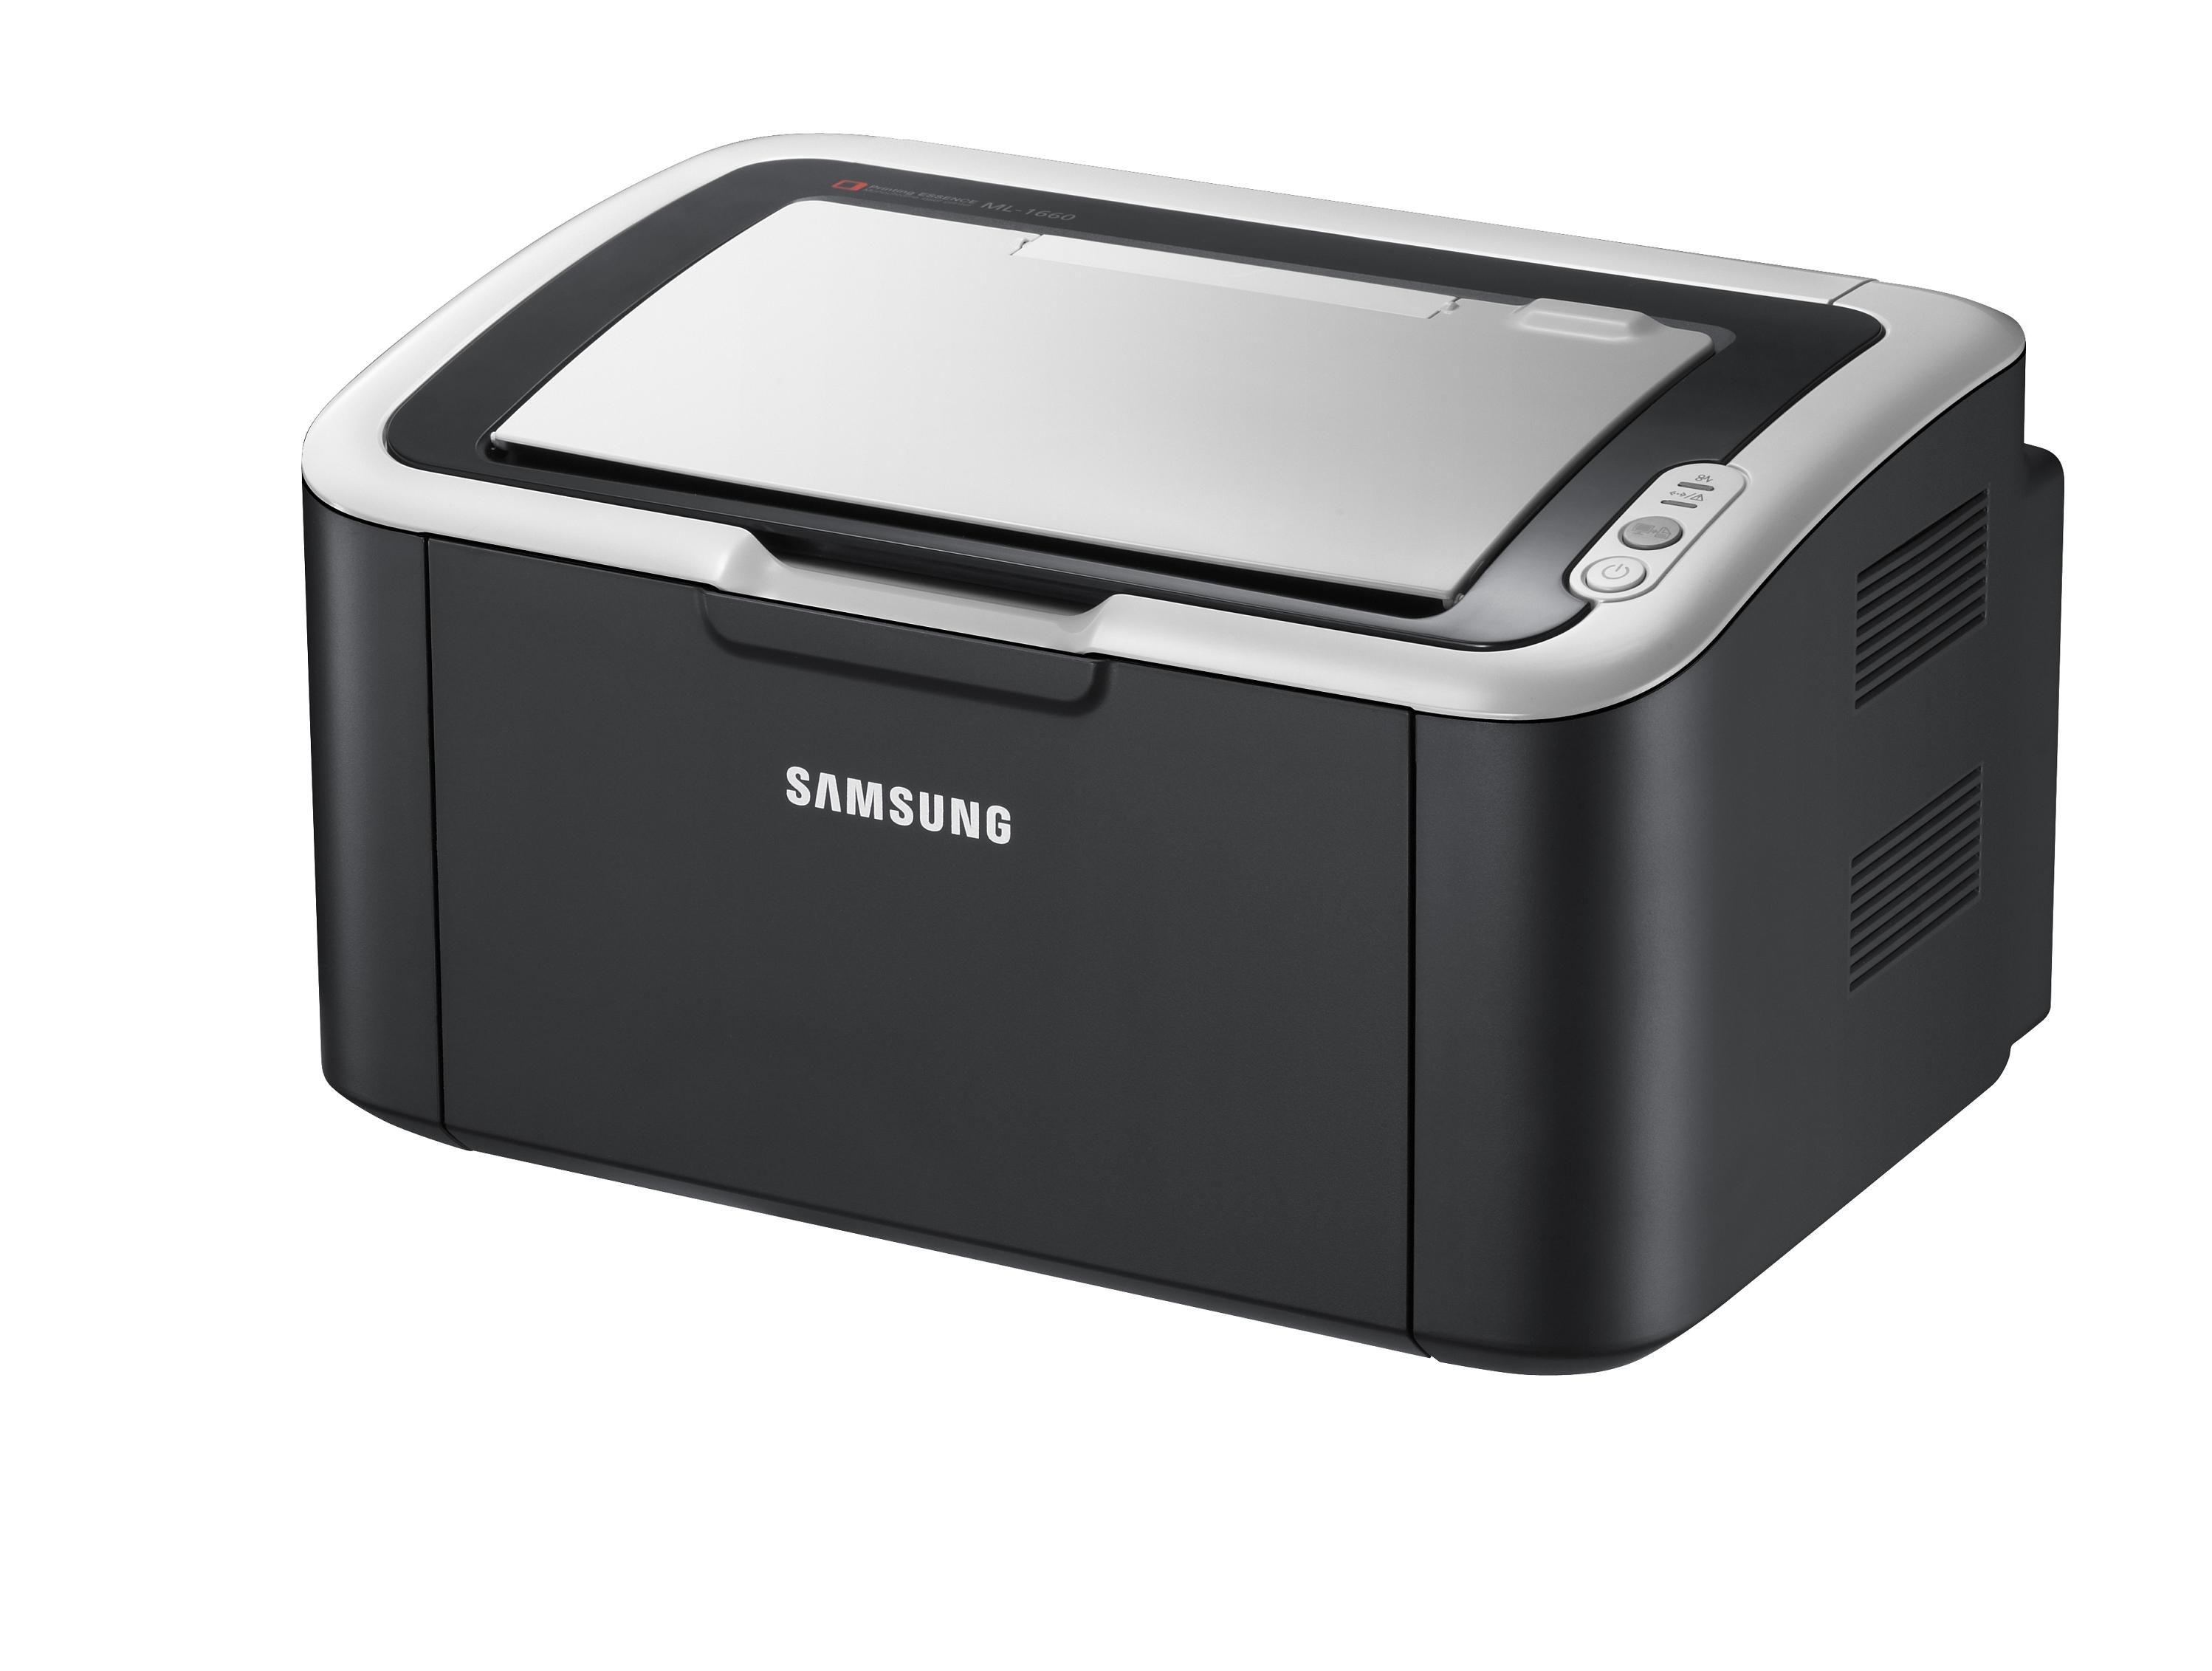 Samsung ML-1867 Laser Printer series